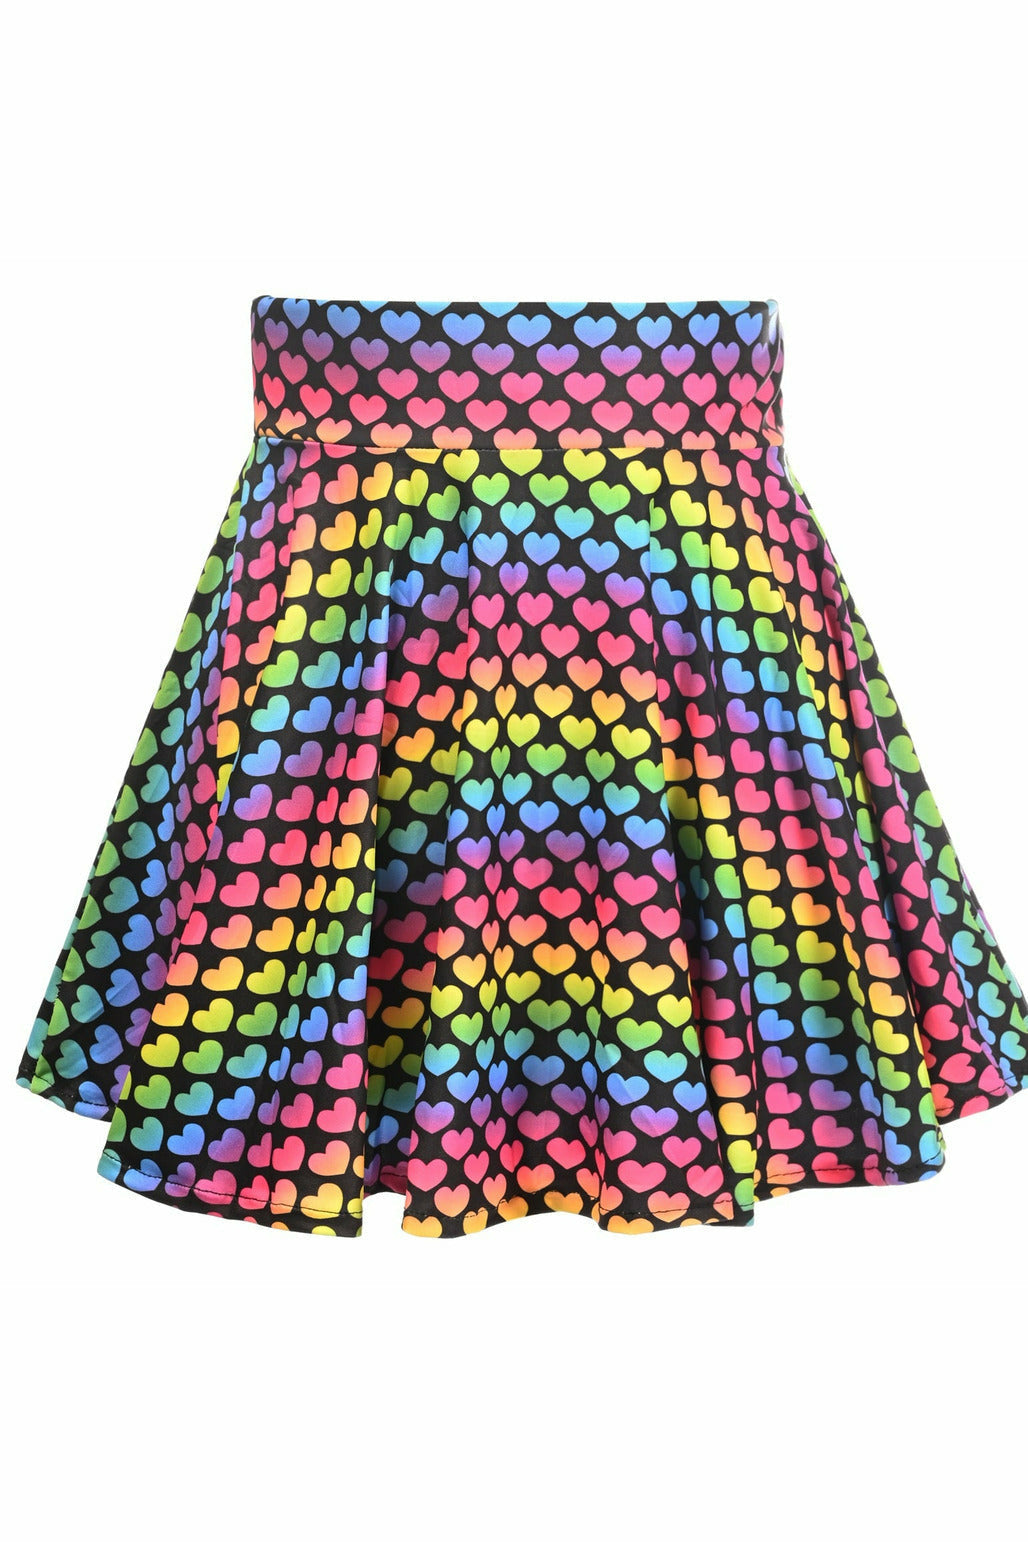 Rainbow Hearts Stretch Lycra Skirt - Lust Charm 